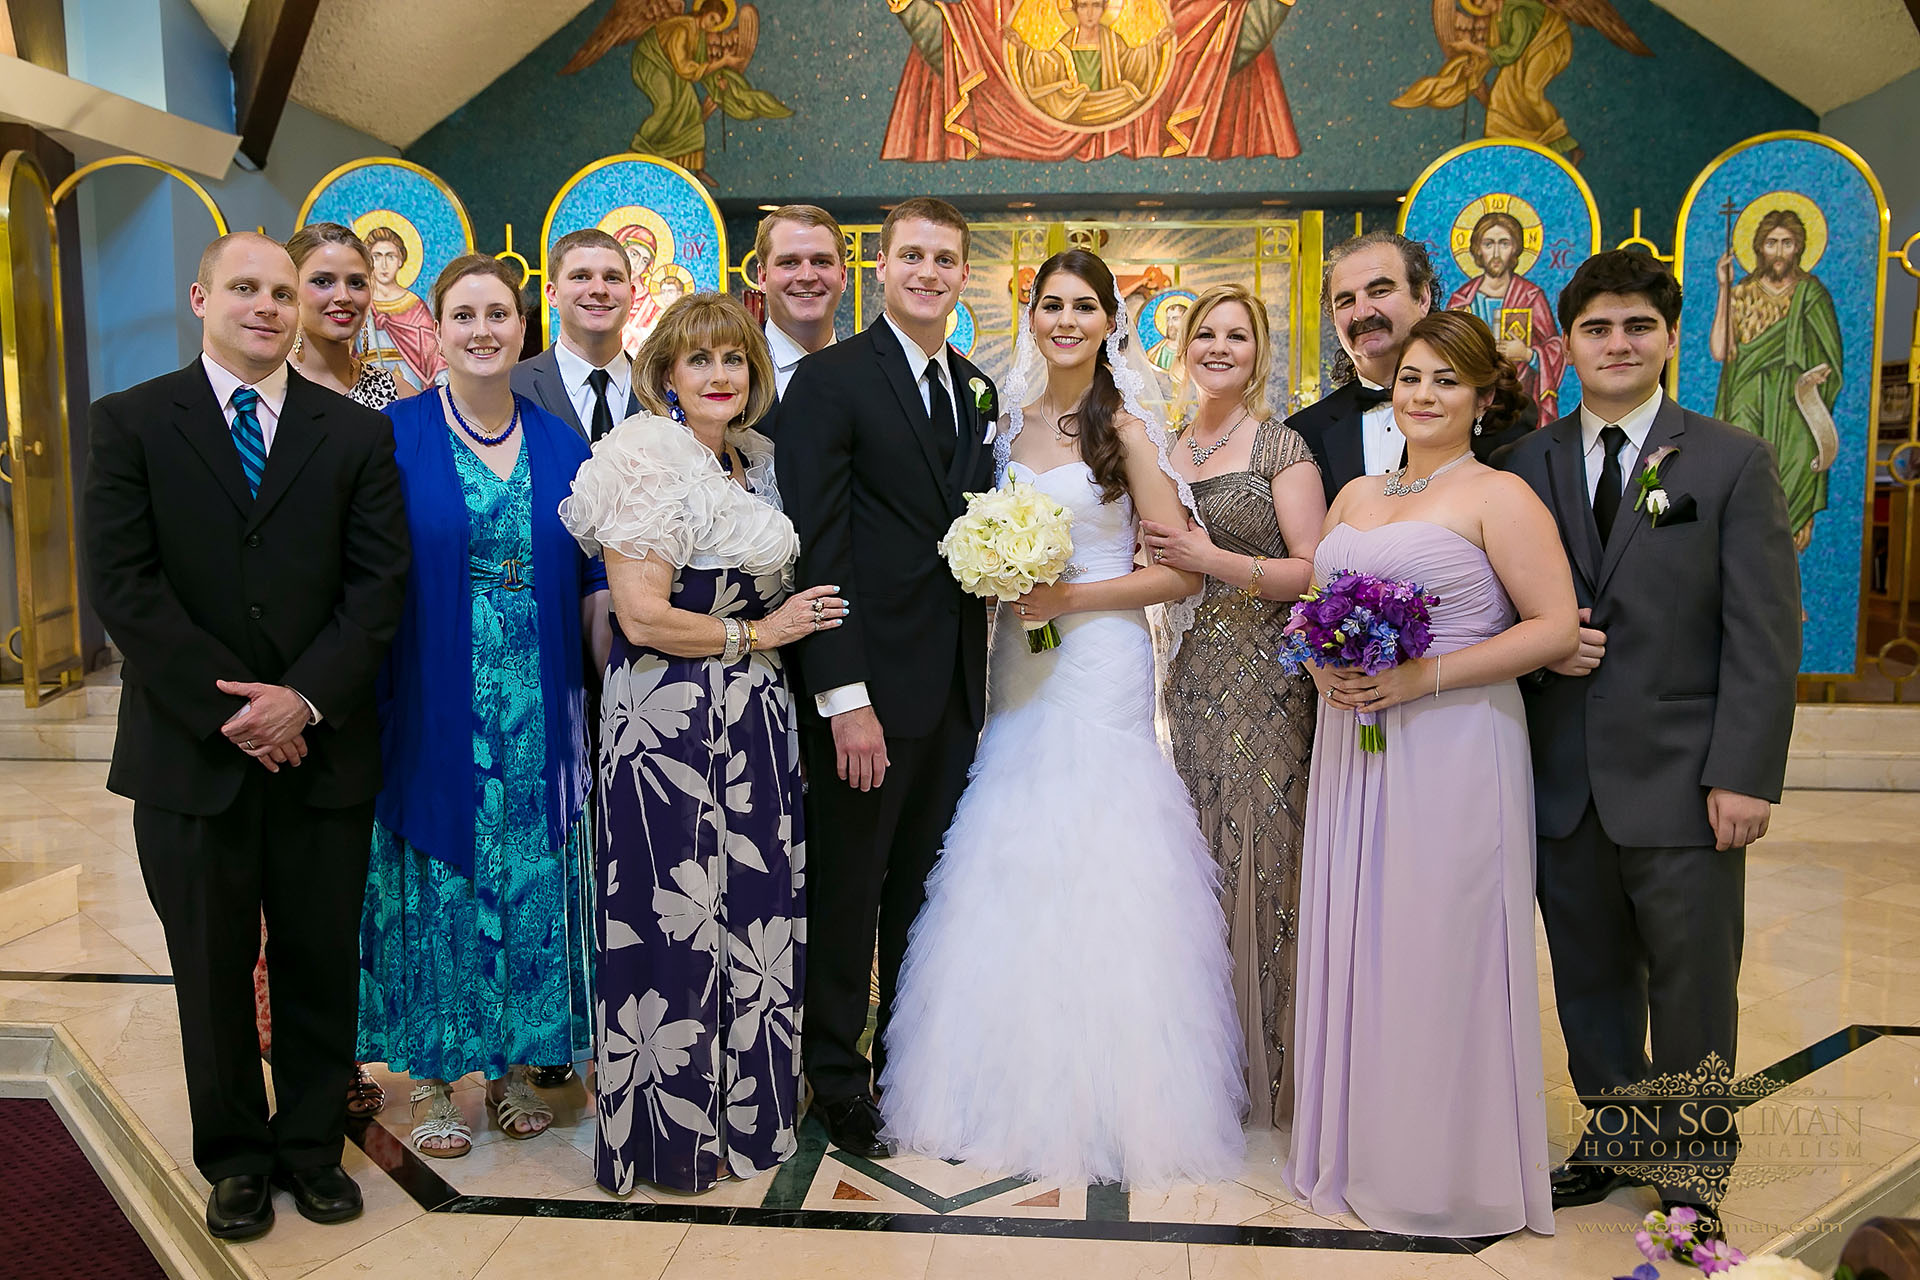 The Greek Orthodox Church Of Saint George wedding